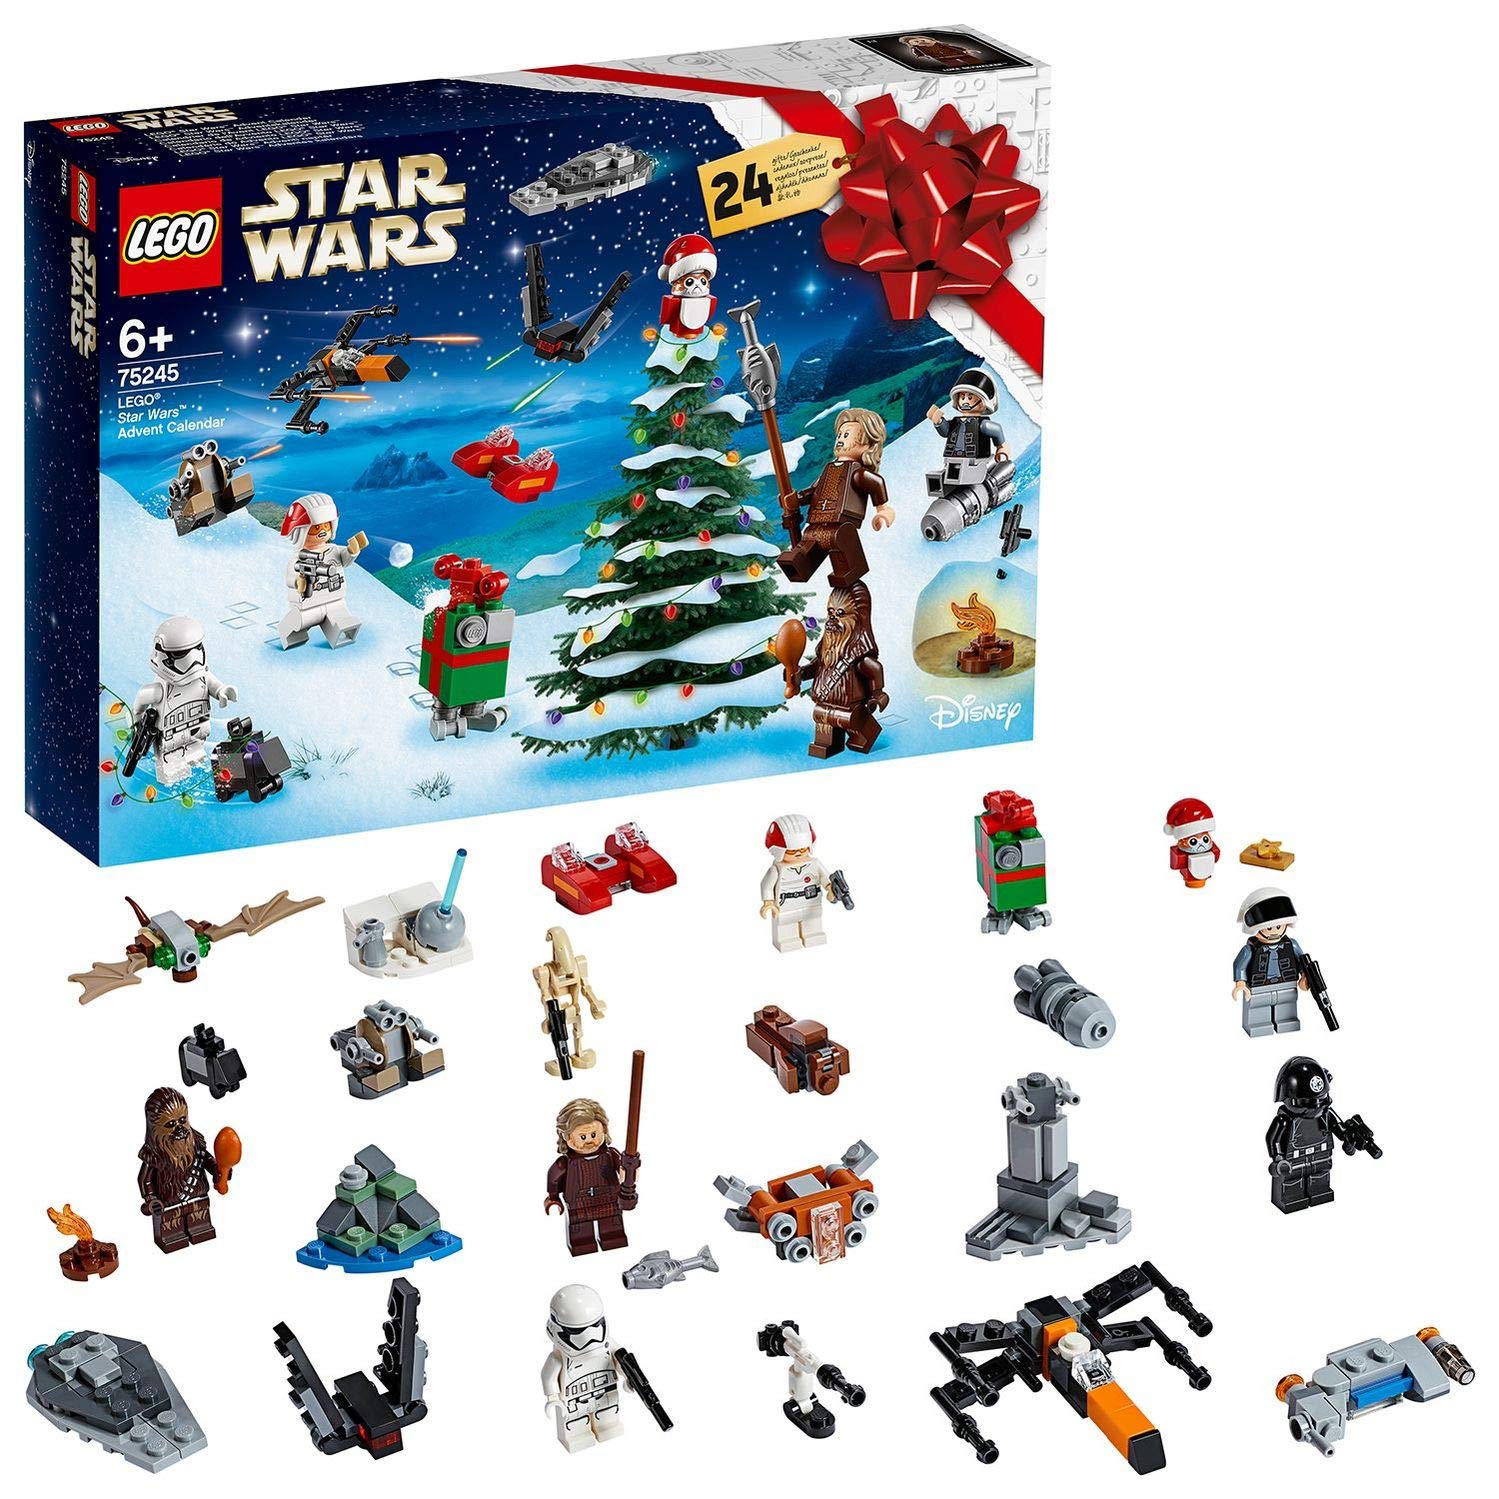 LEGO 75245 Star Wars Advent Calendar, Construction Kit, Multi-Coloured